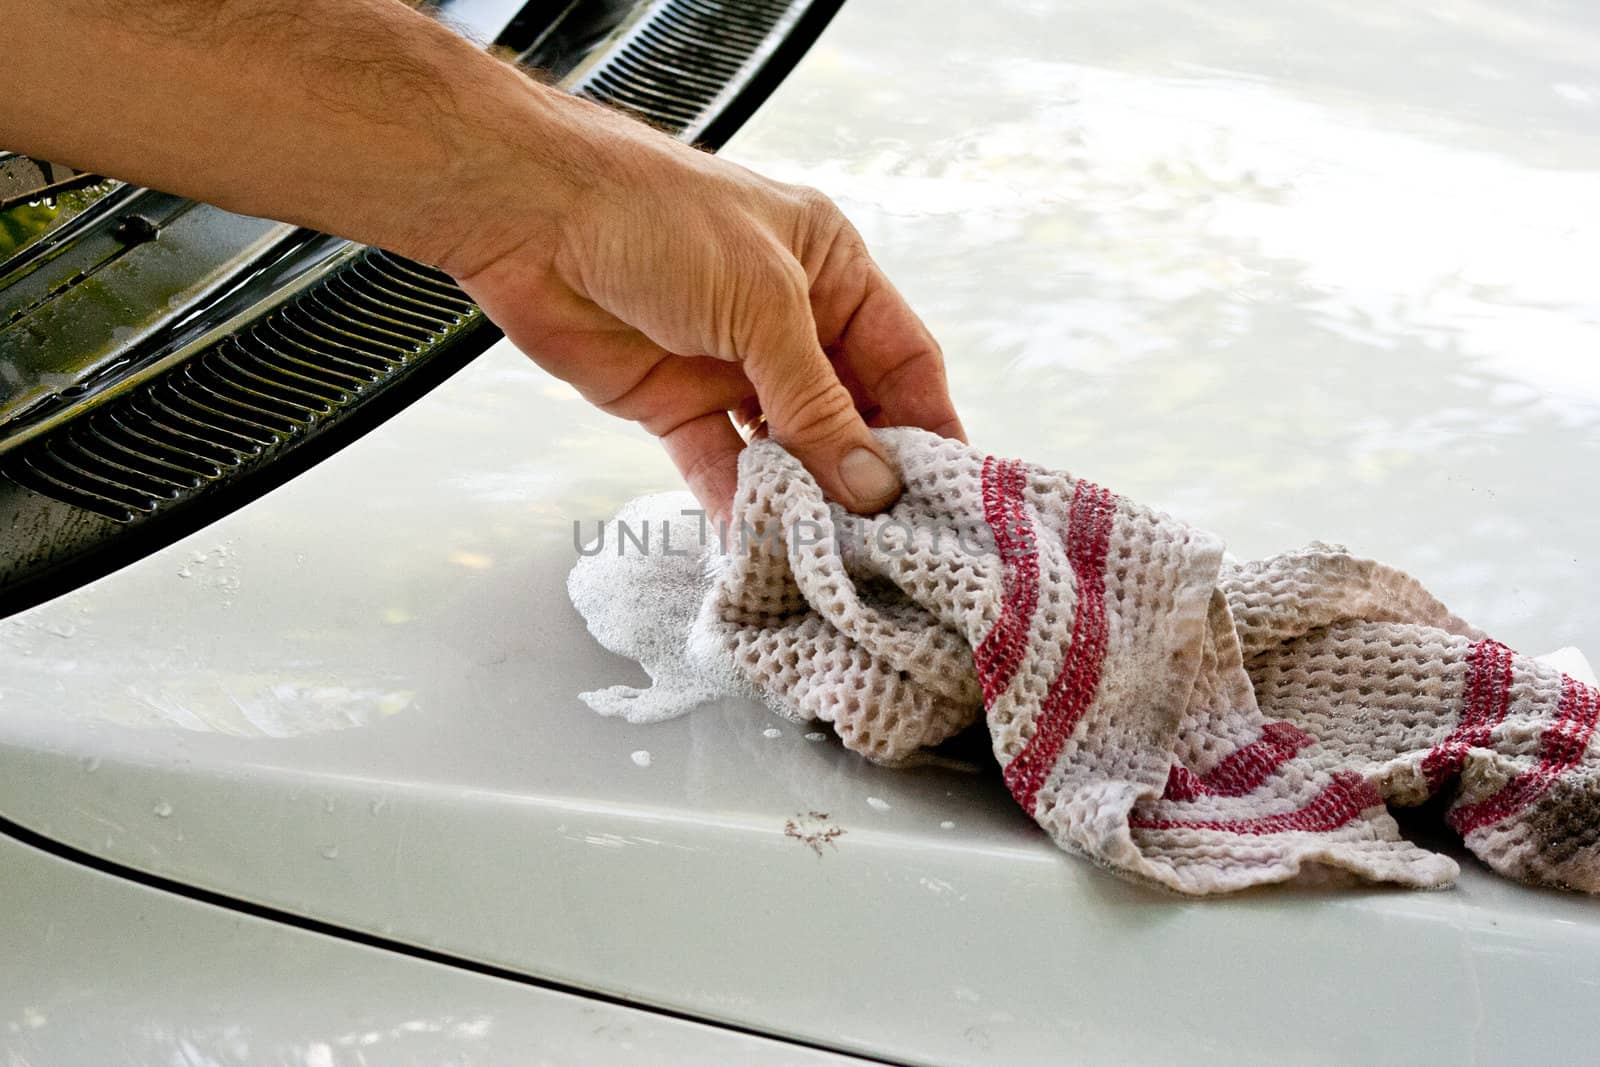 Hand washing a car. by rothphotosc